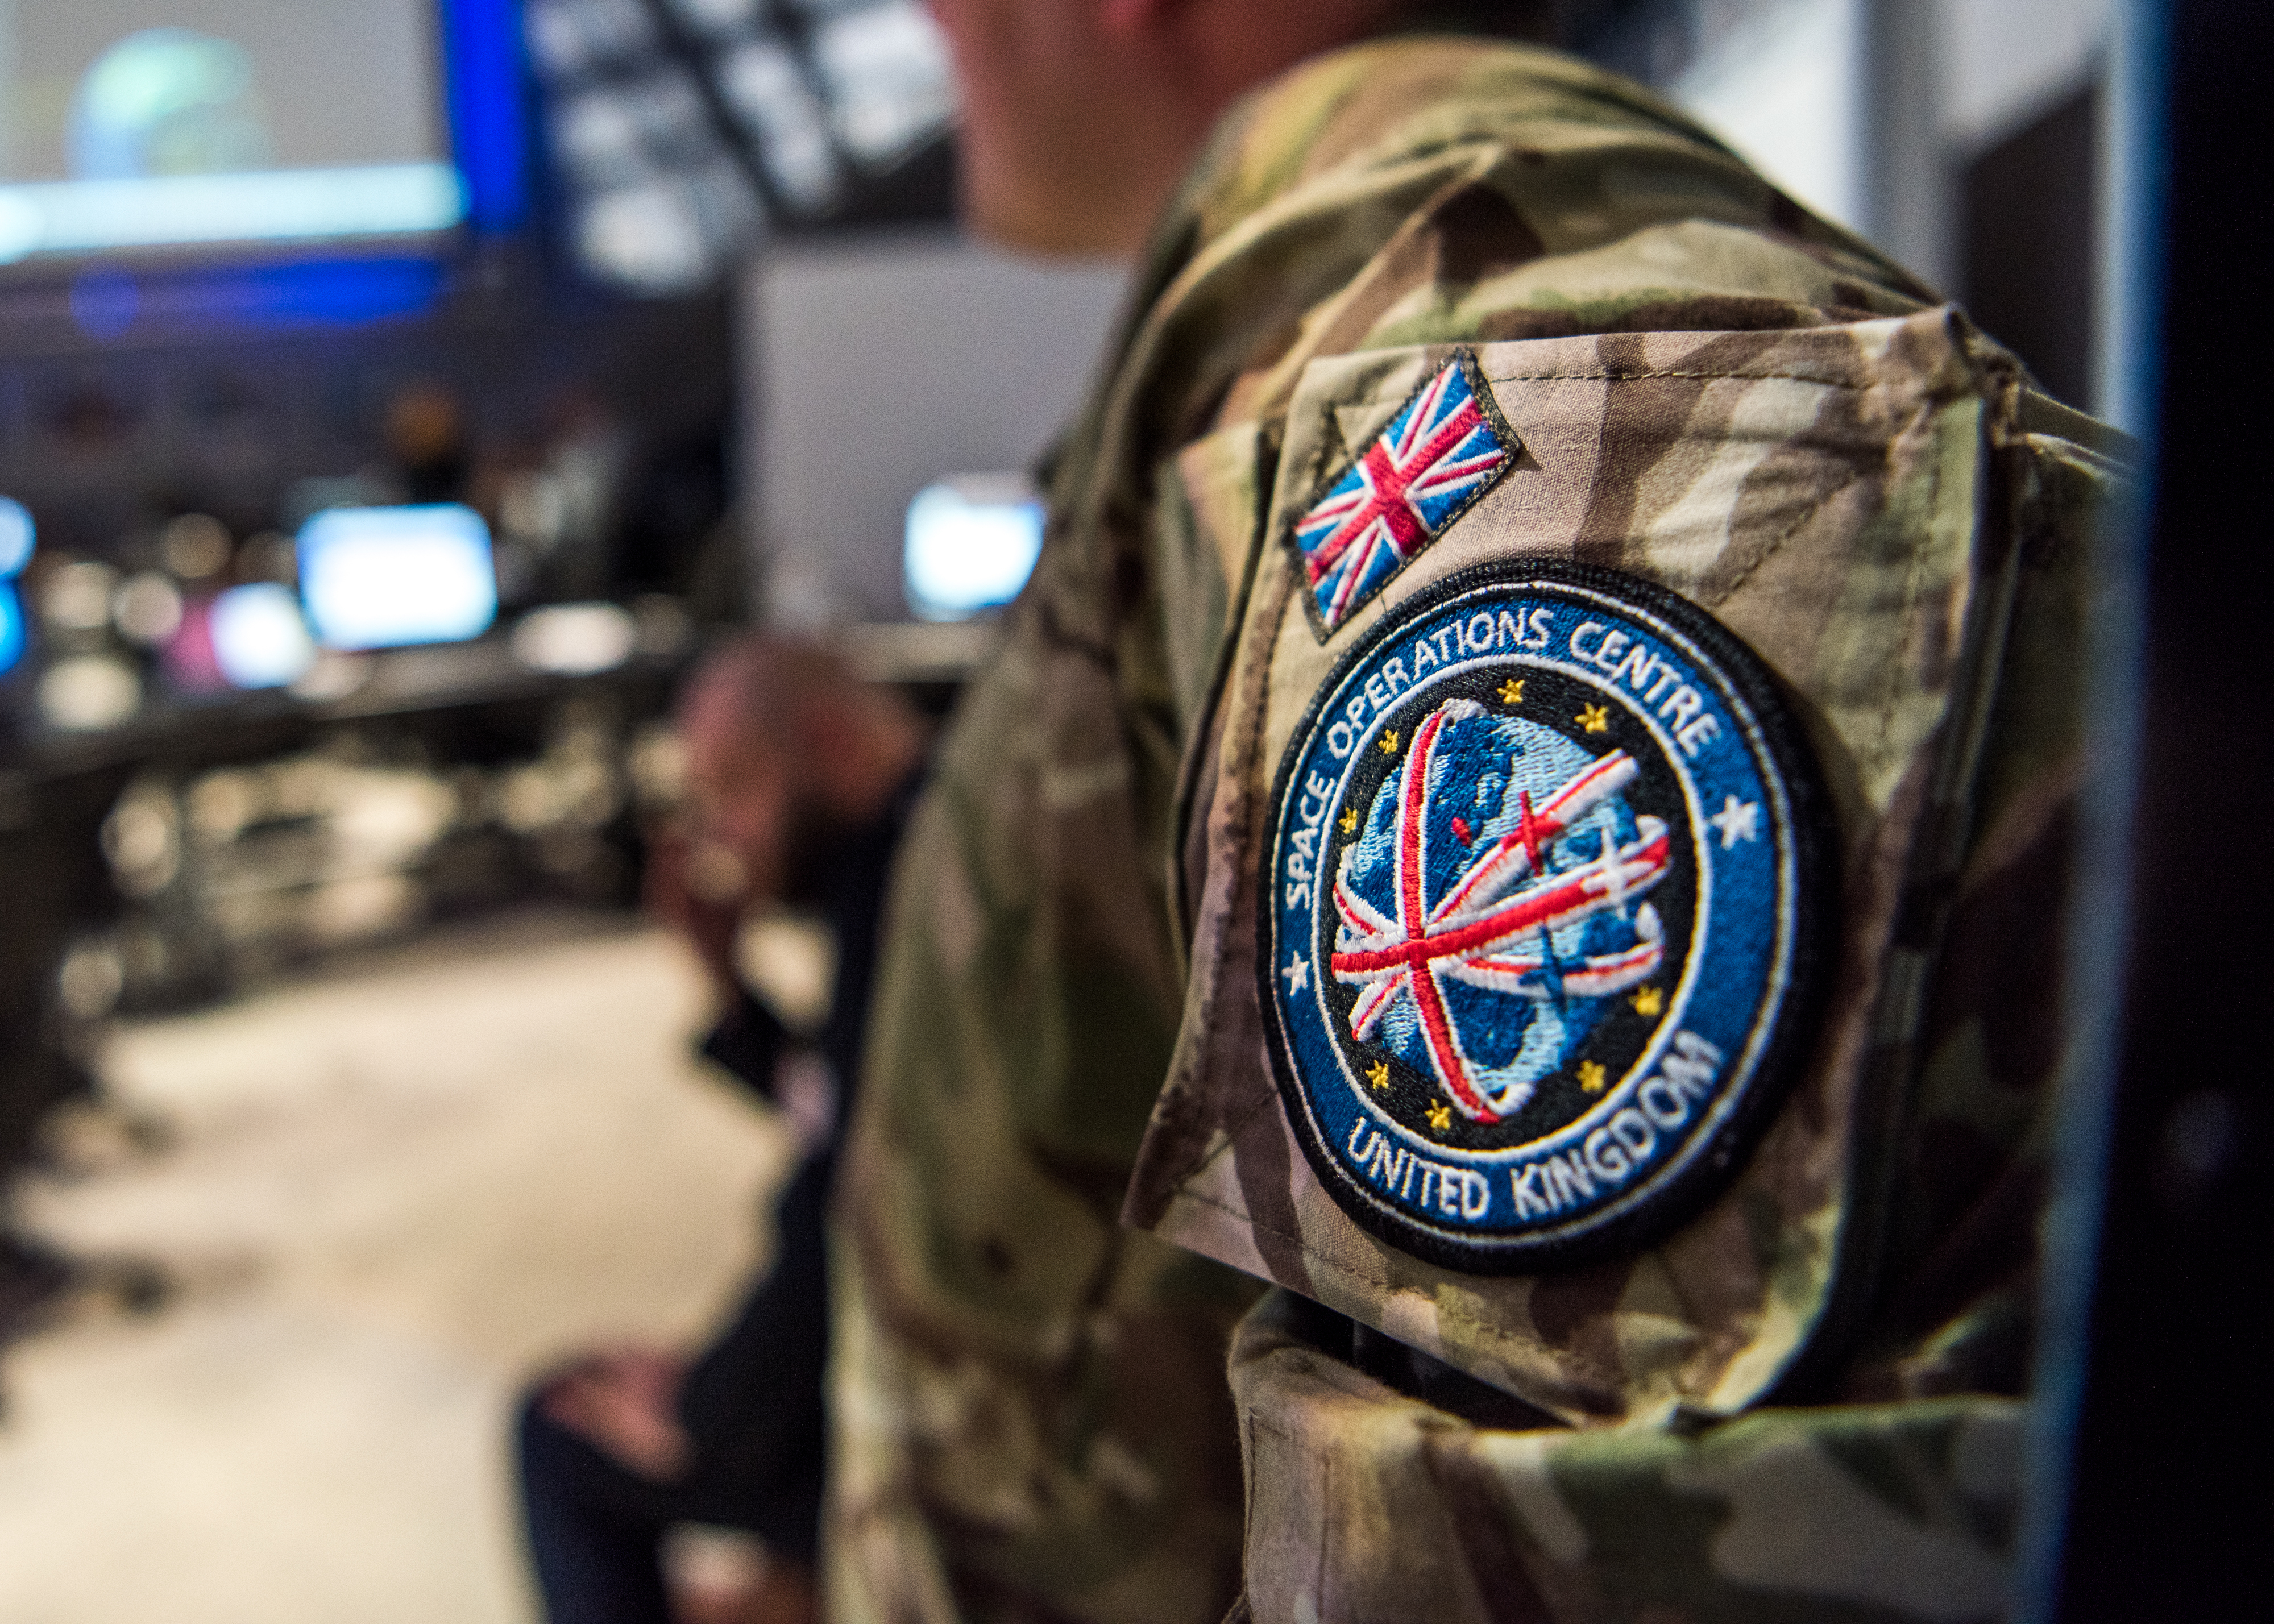 Badge of UK Space Command on uniform.